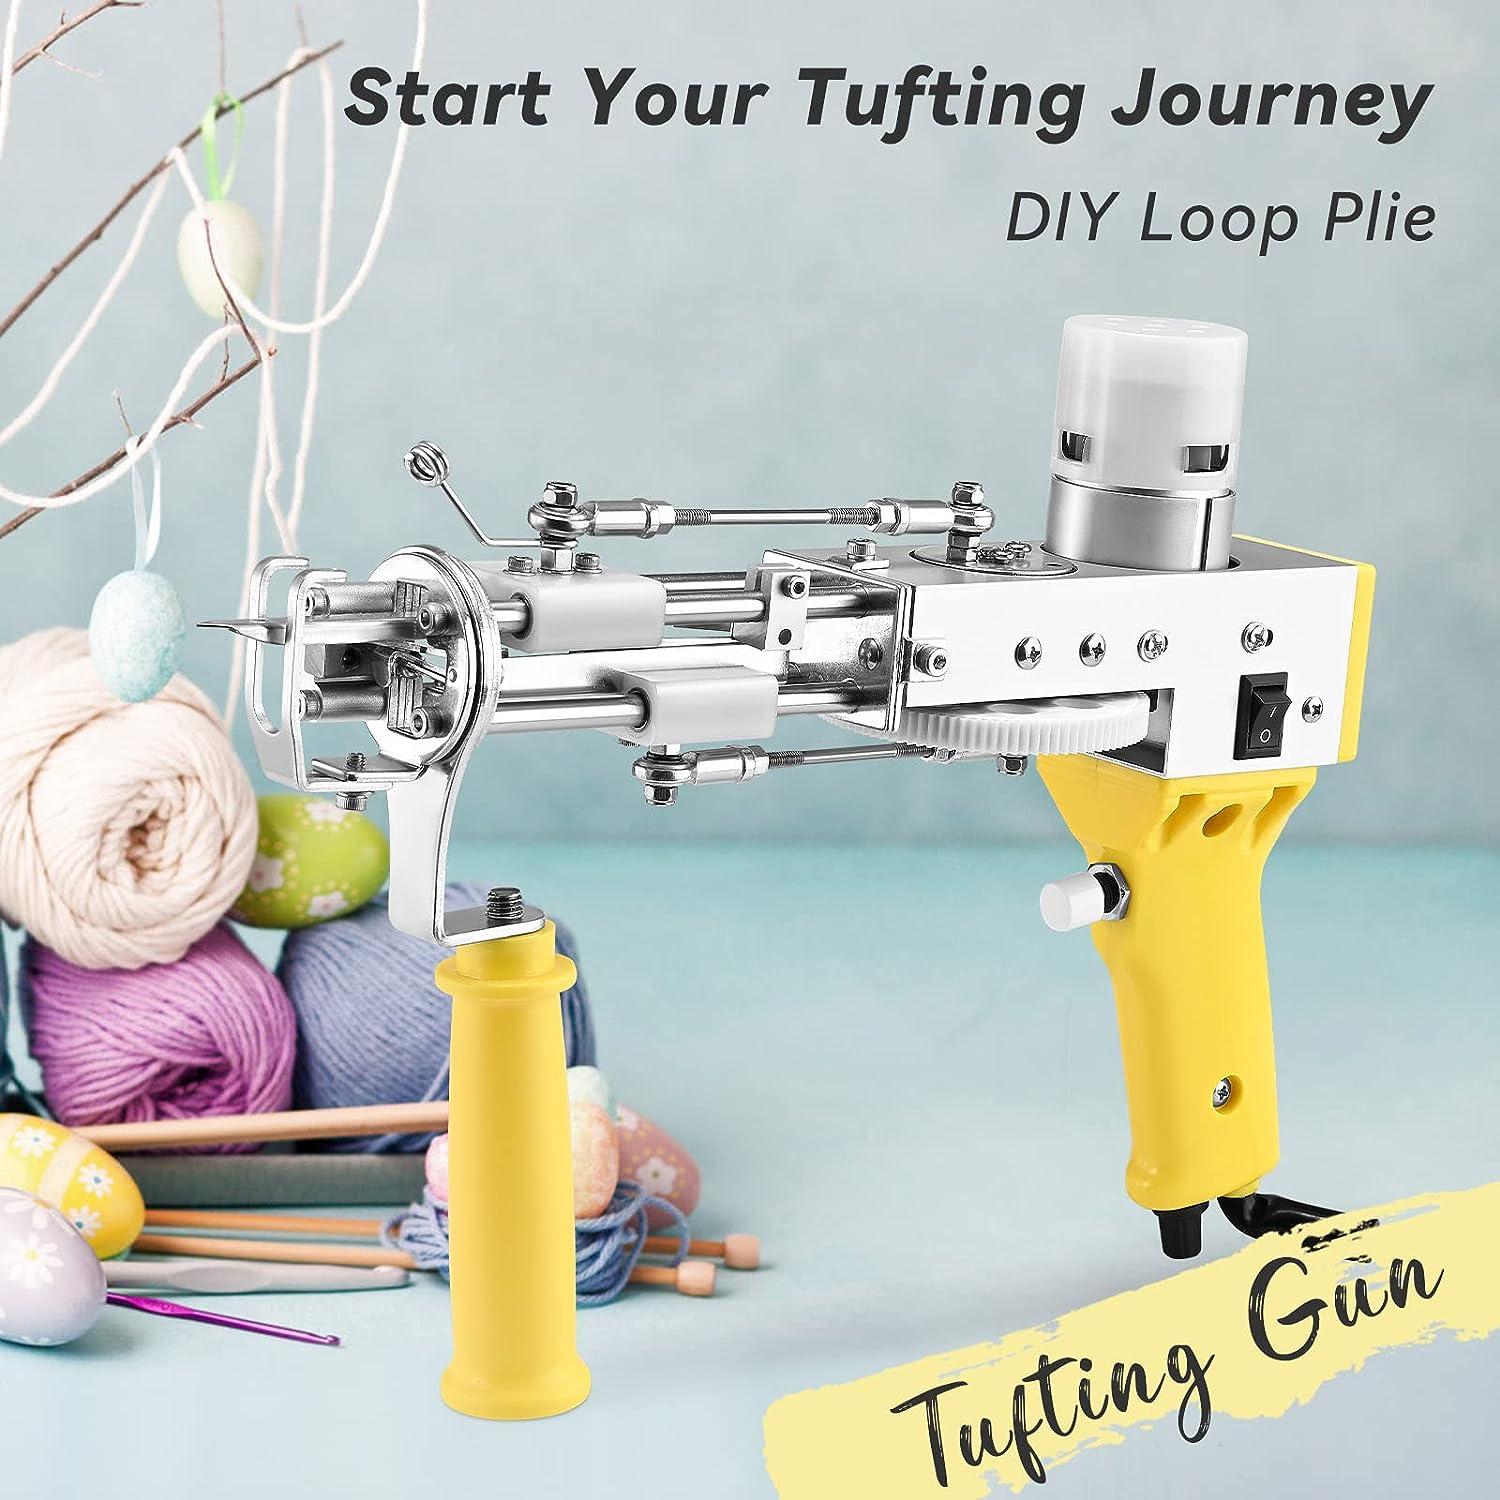 FancyBant Tufting Gun 2 in 1 Rug Gun Cut Pile and Loop Pile Rug Tufting Gun  Kit Handheld Knitting Rug Gun with Yarn Tufting Cloth Backing Cloth Tools  Kit (Paisley Yellow)